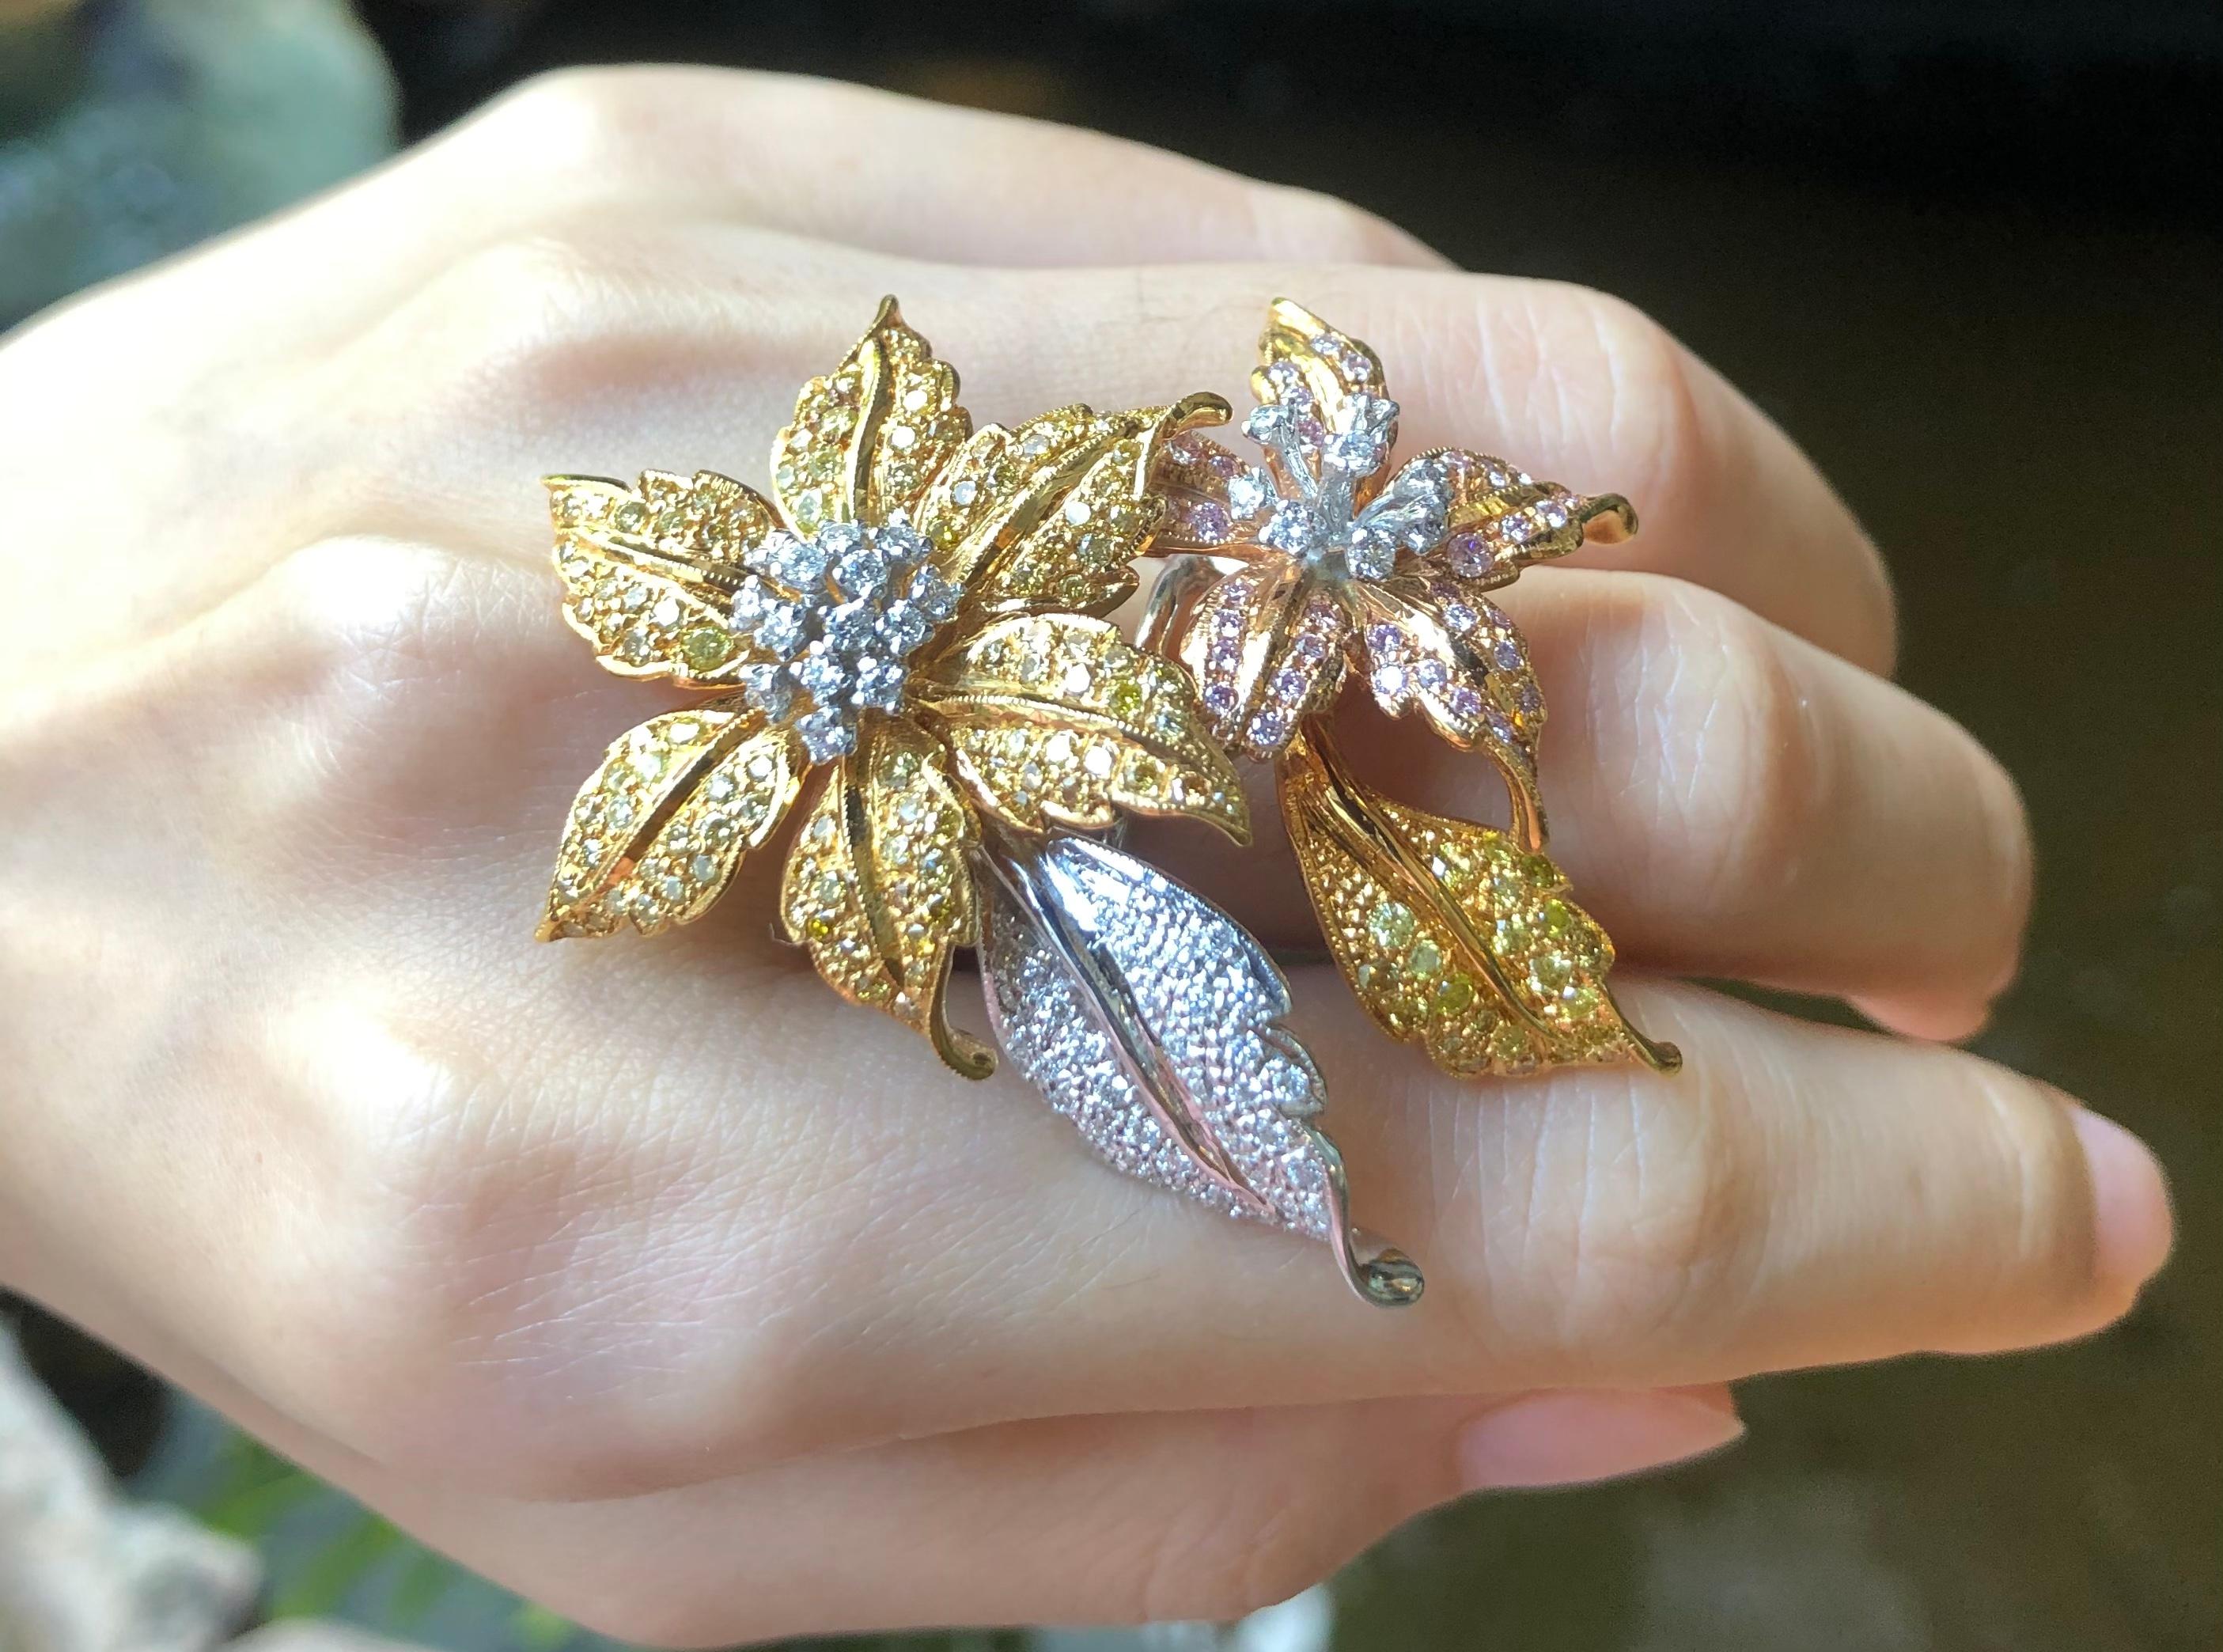 Diamond 0.71 carat, Yellow Diamond 1.49 carats and Pink Diamond 0.51 carat Ring set in 18 Karat White Gold Settings

Width:  4.3 cm 
Length: 5.2 cm
Ring Size: 54
Total Weight: 21.82 grams

